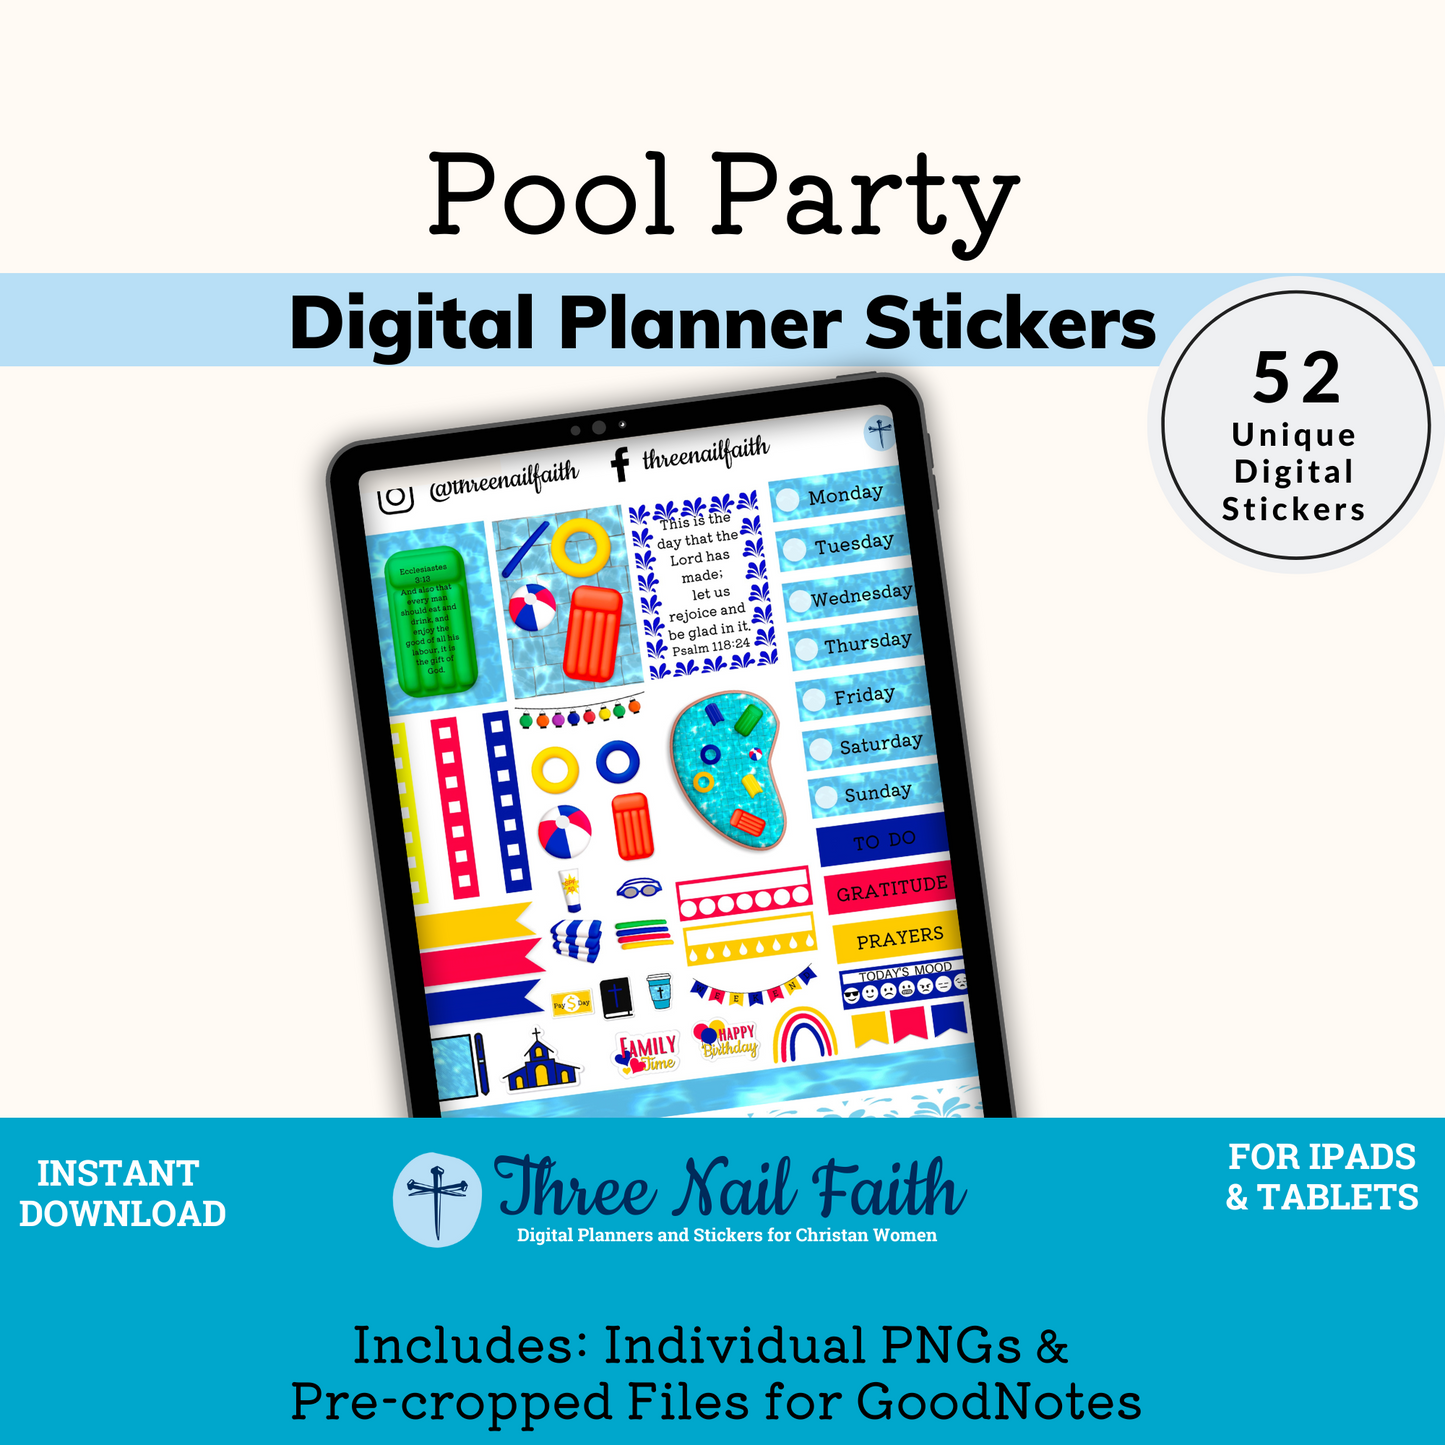 Pool digital sticker kit with 52 Digital stickers